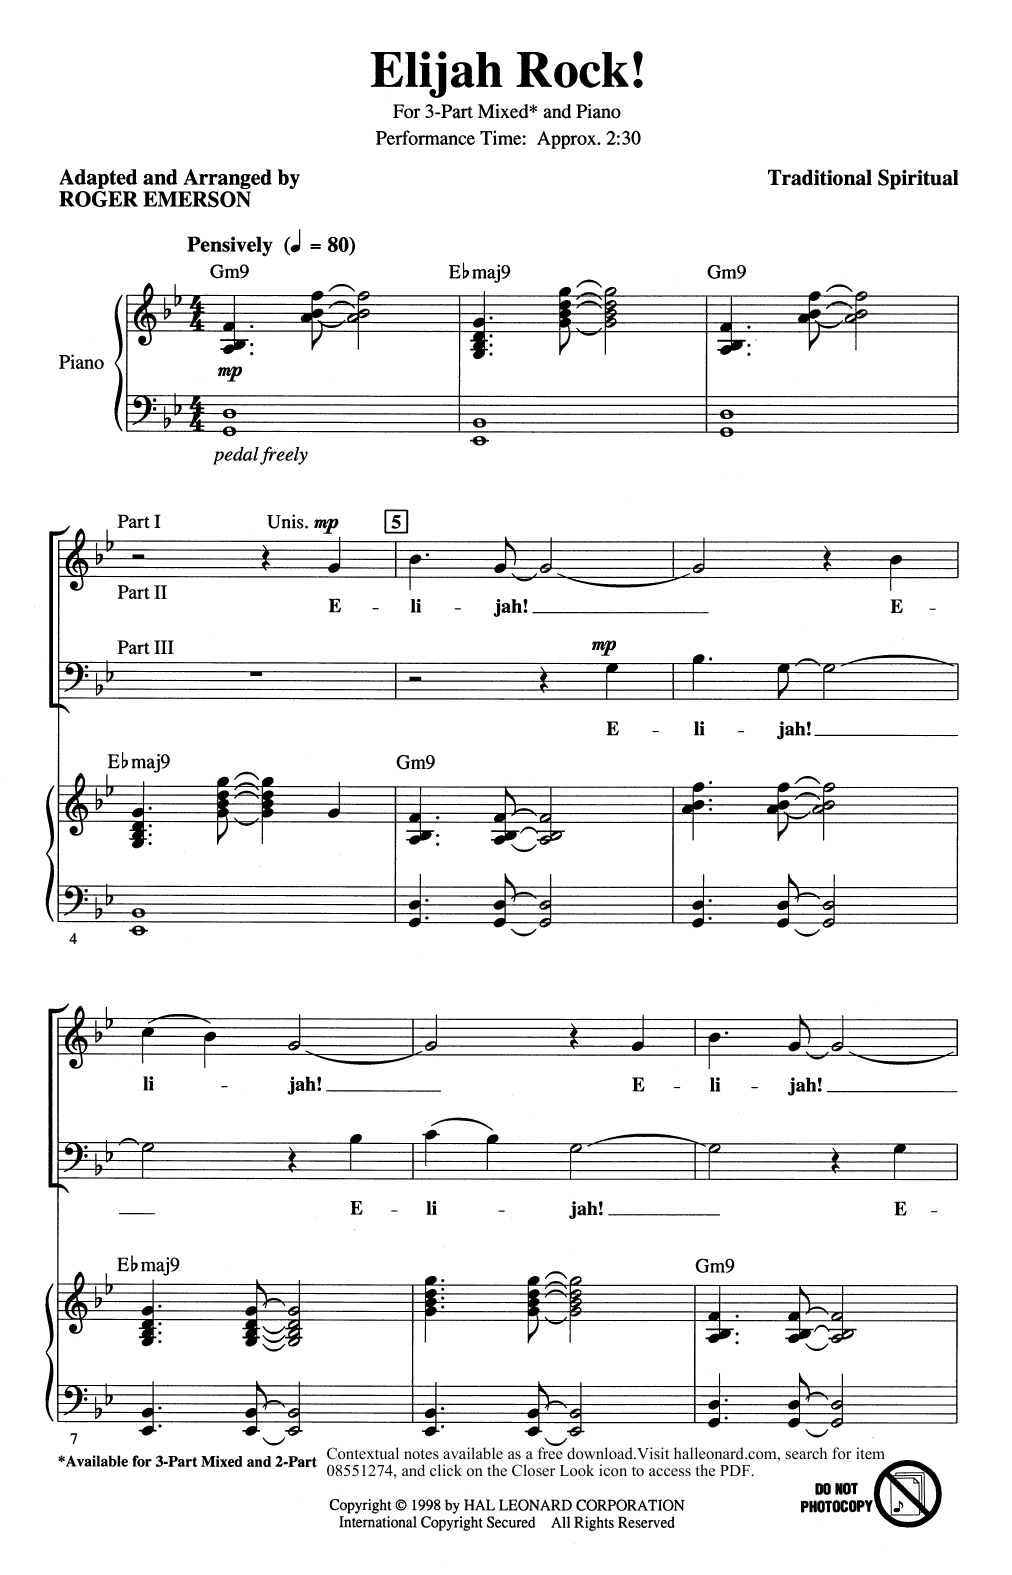 Traditional Spiritual Elijah Rock (arr. Roger Emerson) Sheet Music Notes & Chords for 3-Part Mixed Choir - Download or Print PDF